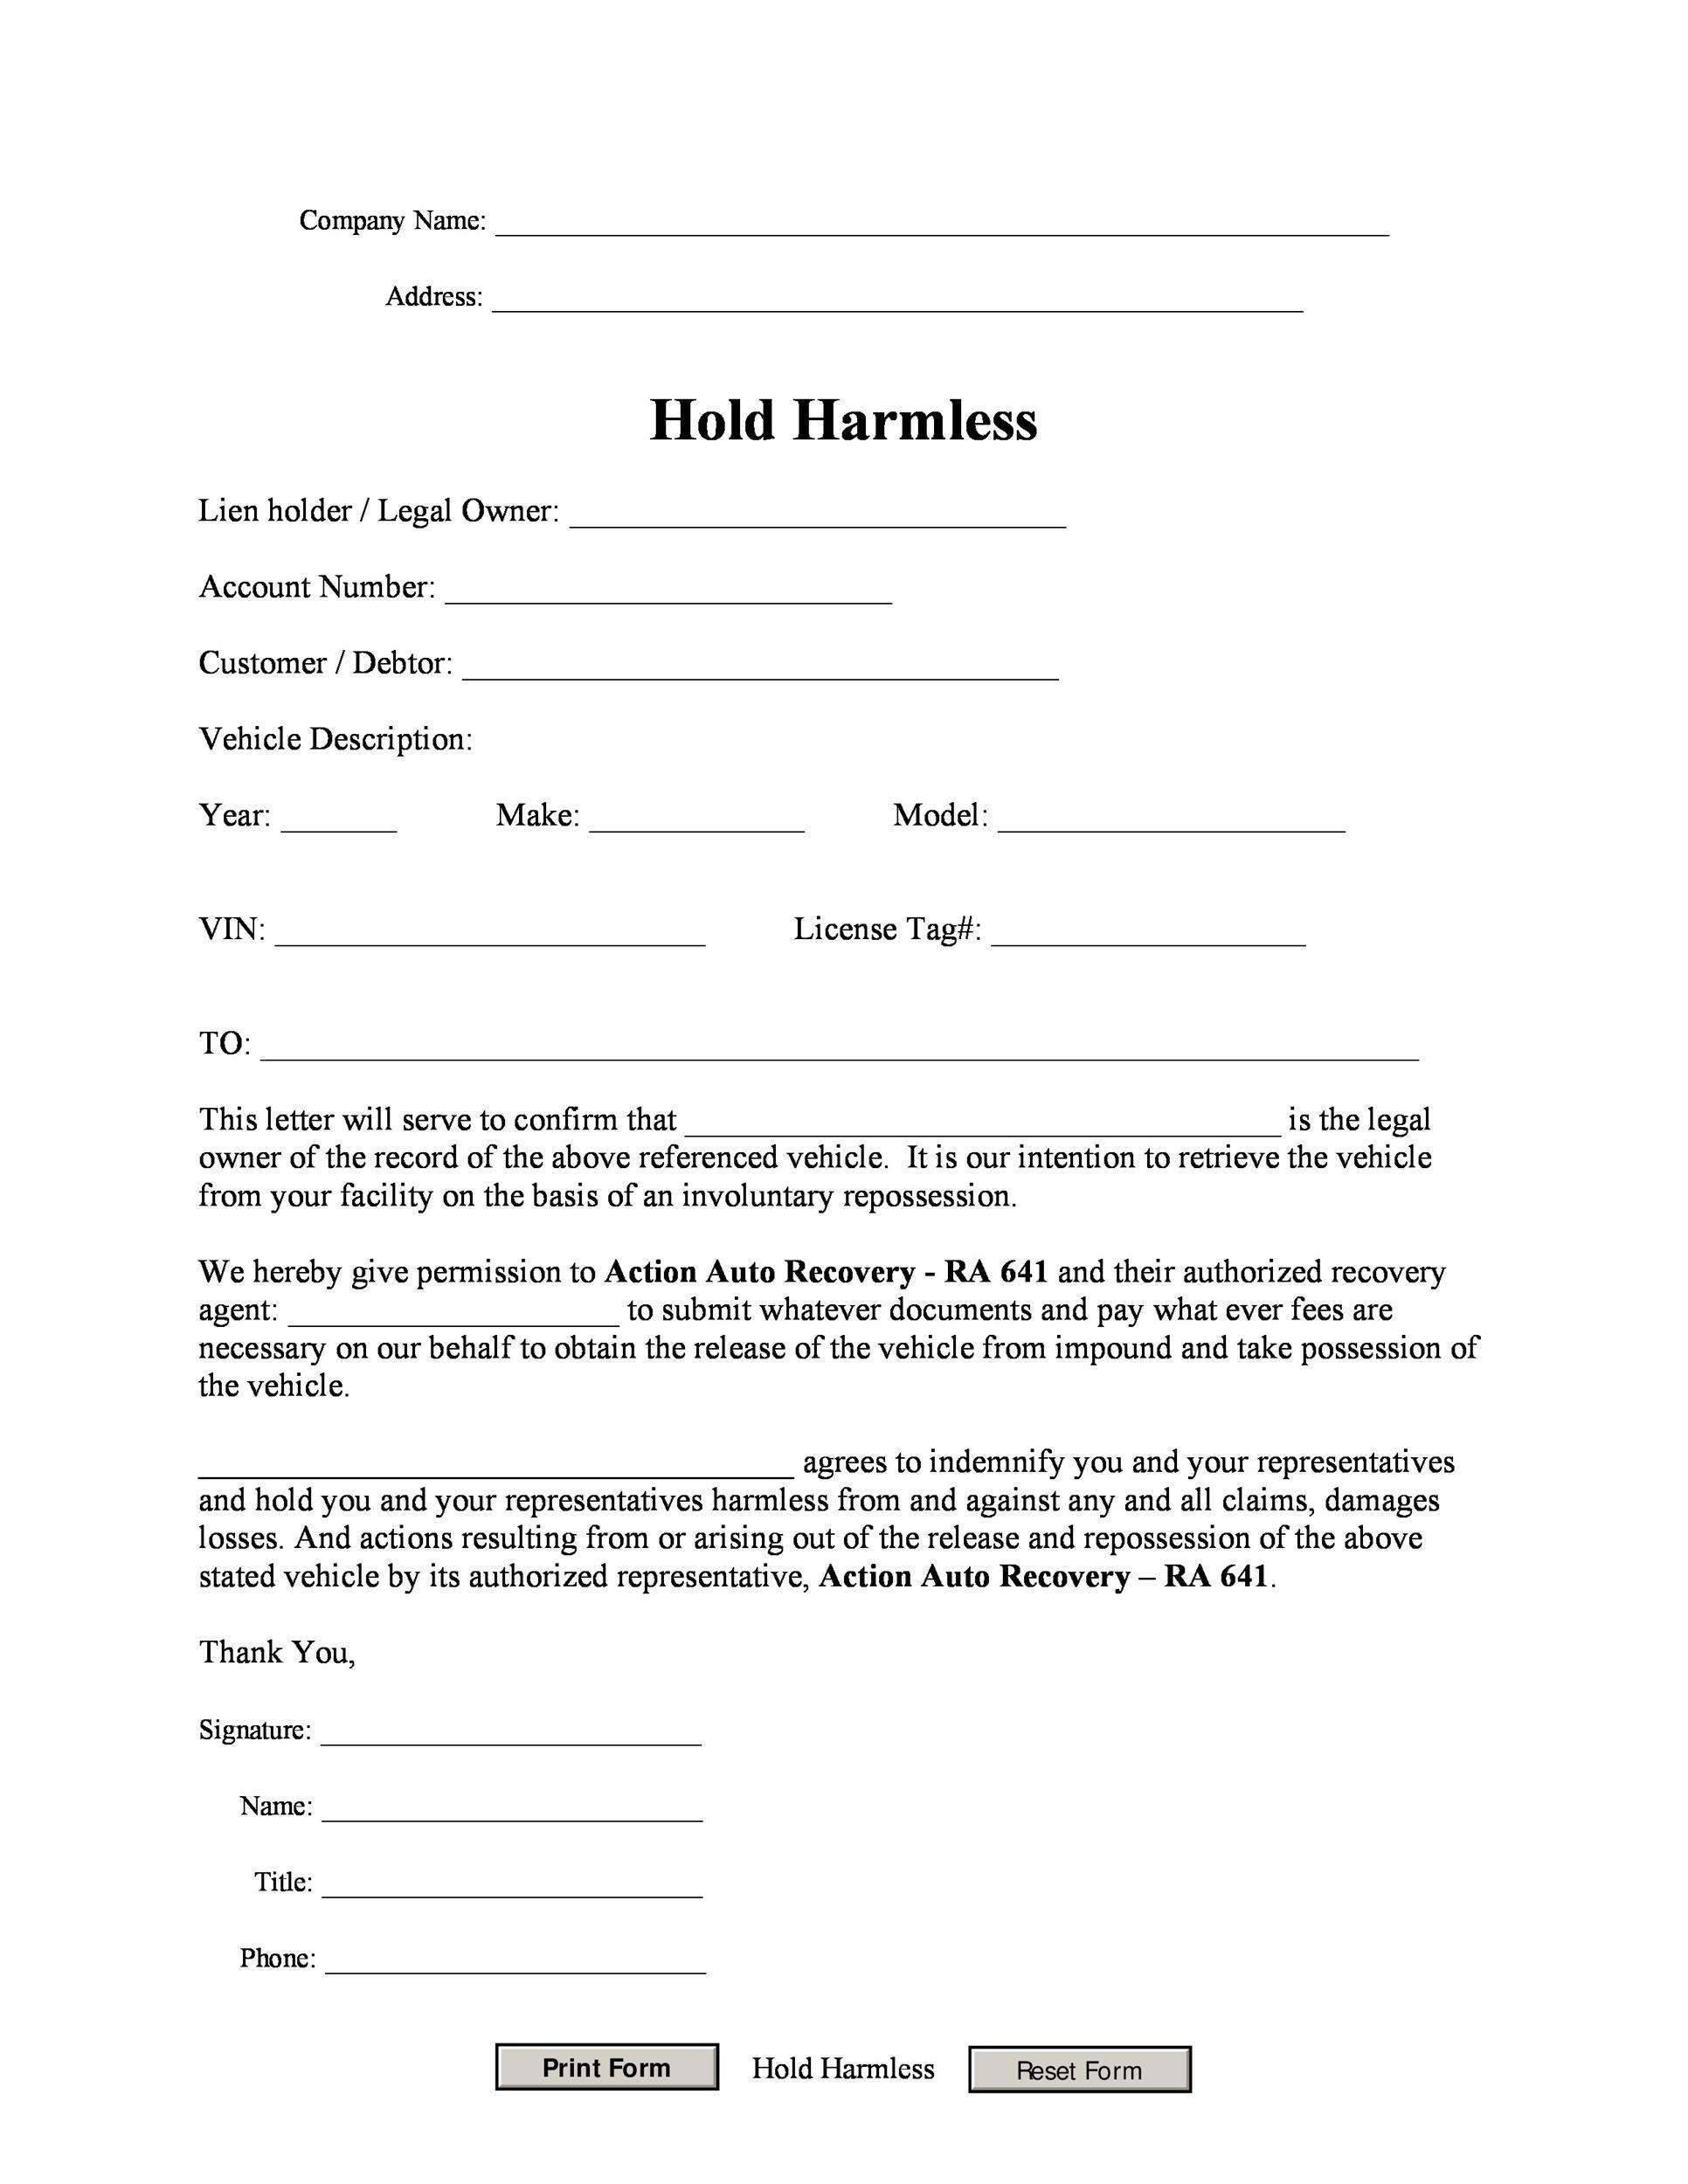 40 Hold Harmless Agreement Templates Free TemplateLab